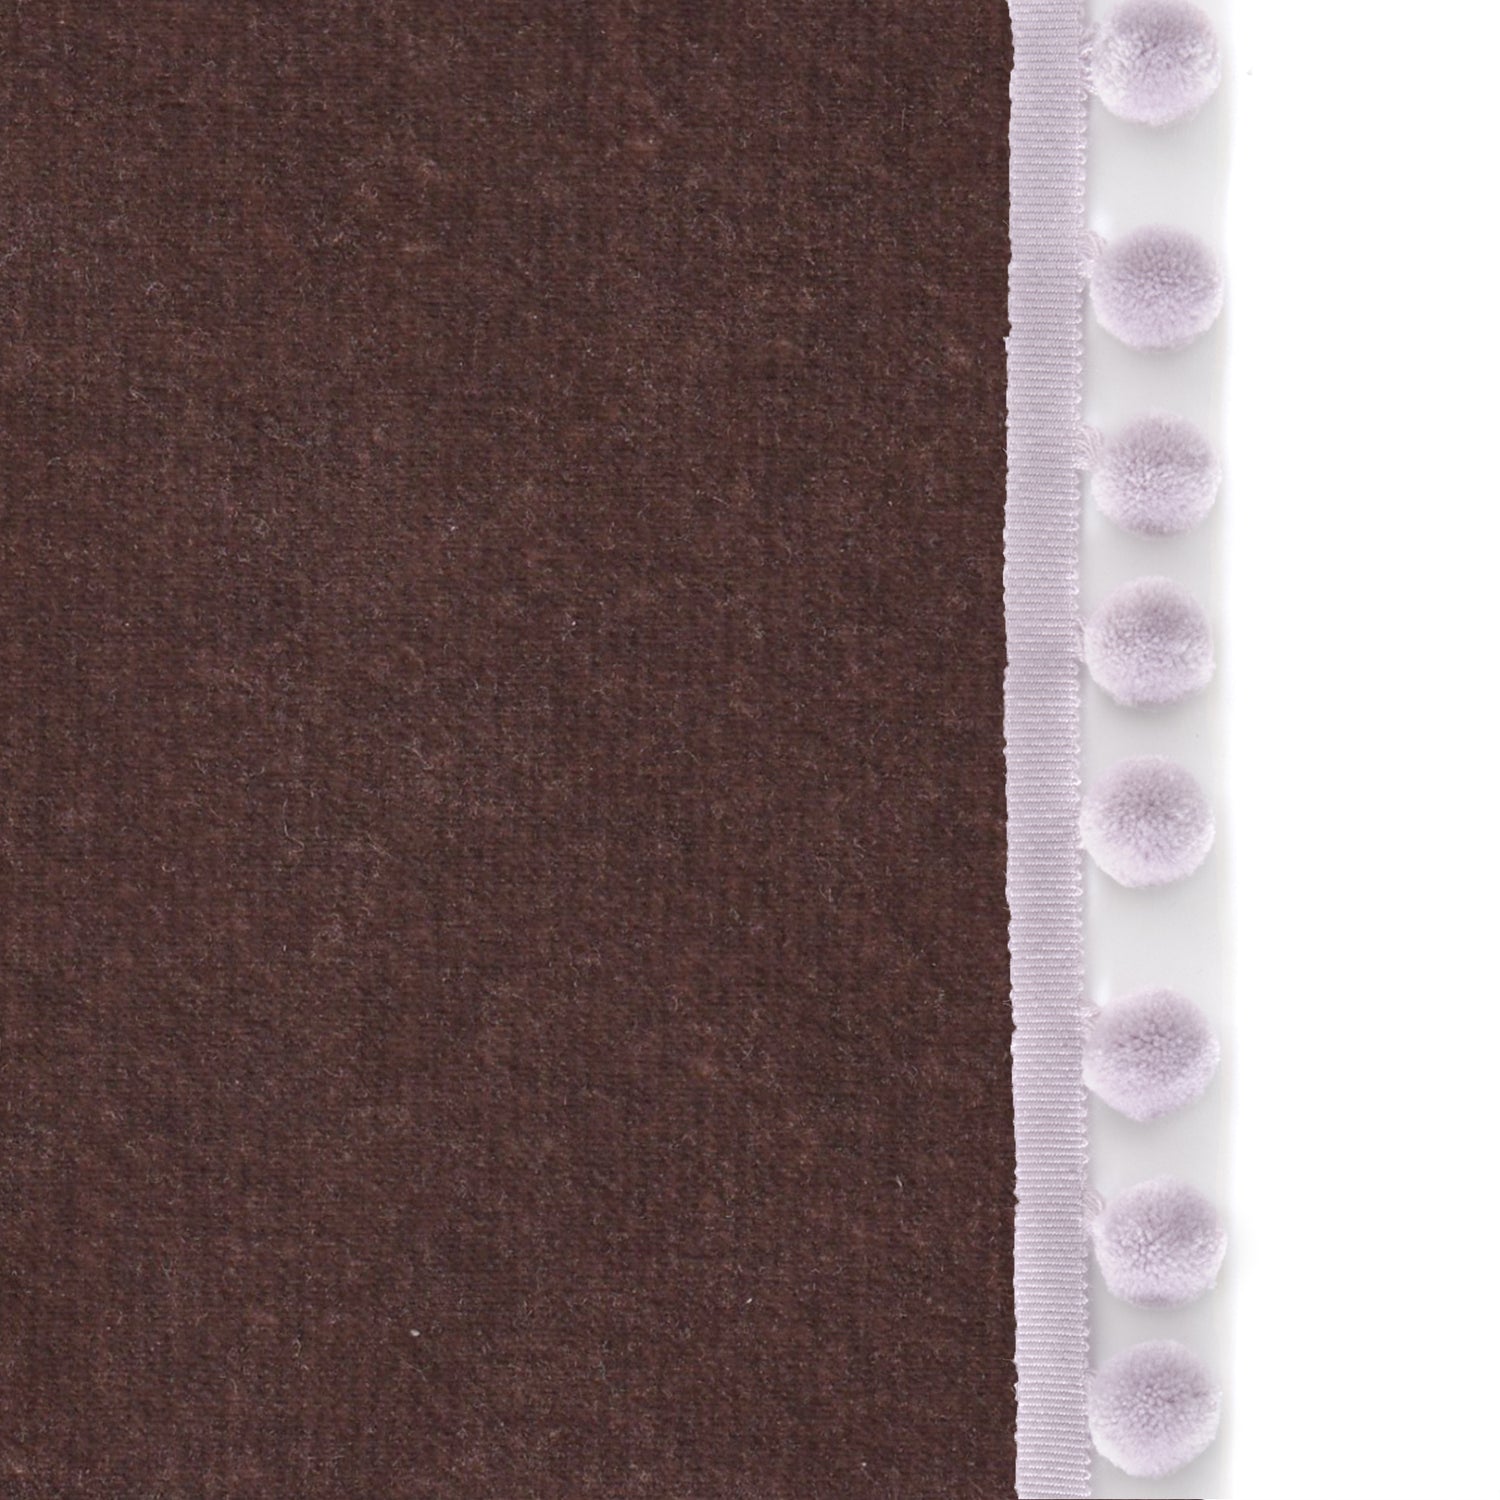 Upclose picture of Walnut Velvet custom Browncurtain with lilac pom pom trim